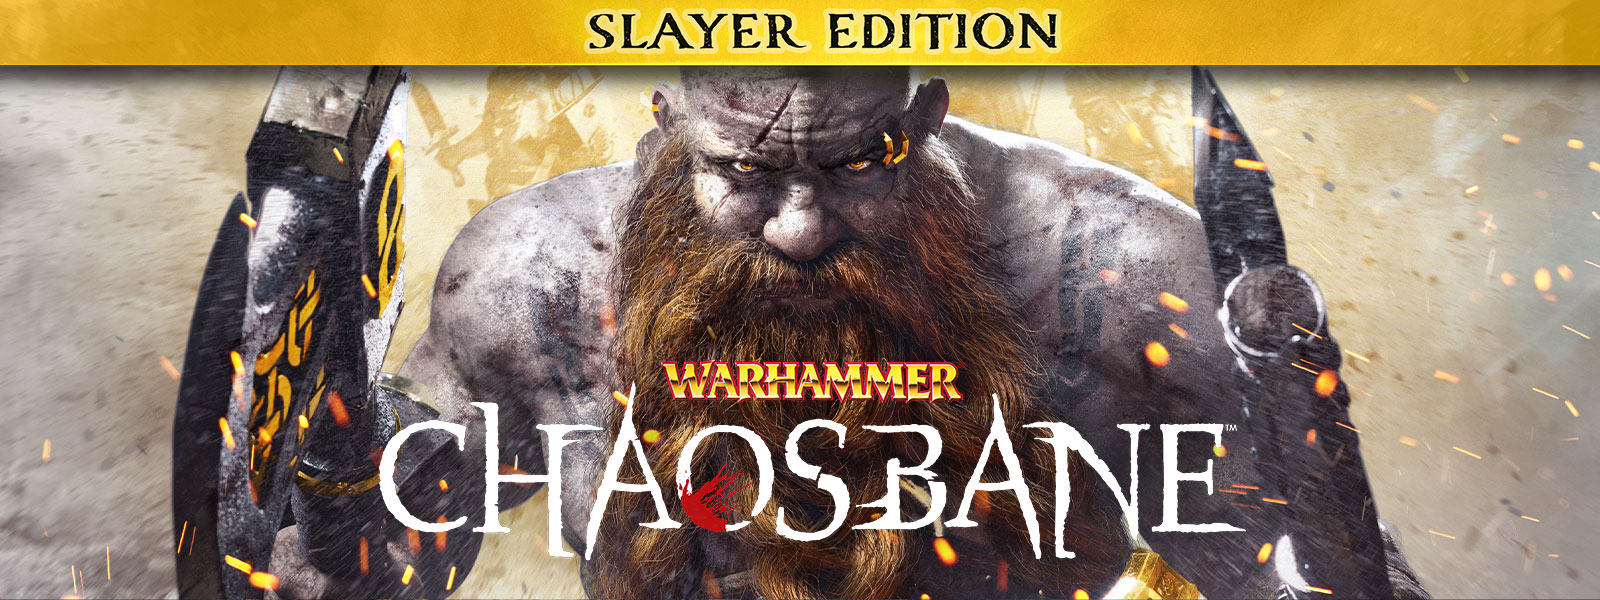 Warhammer: Chaosbane, Slayer Edition, bradatý muž kráča cez iskry a v každej ruke má sekeru.